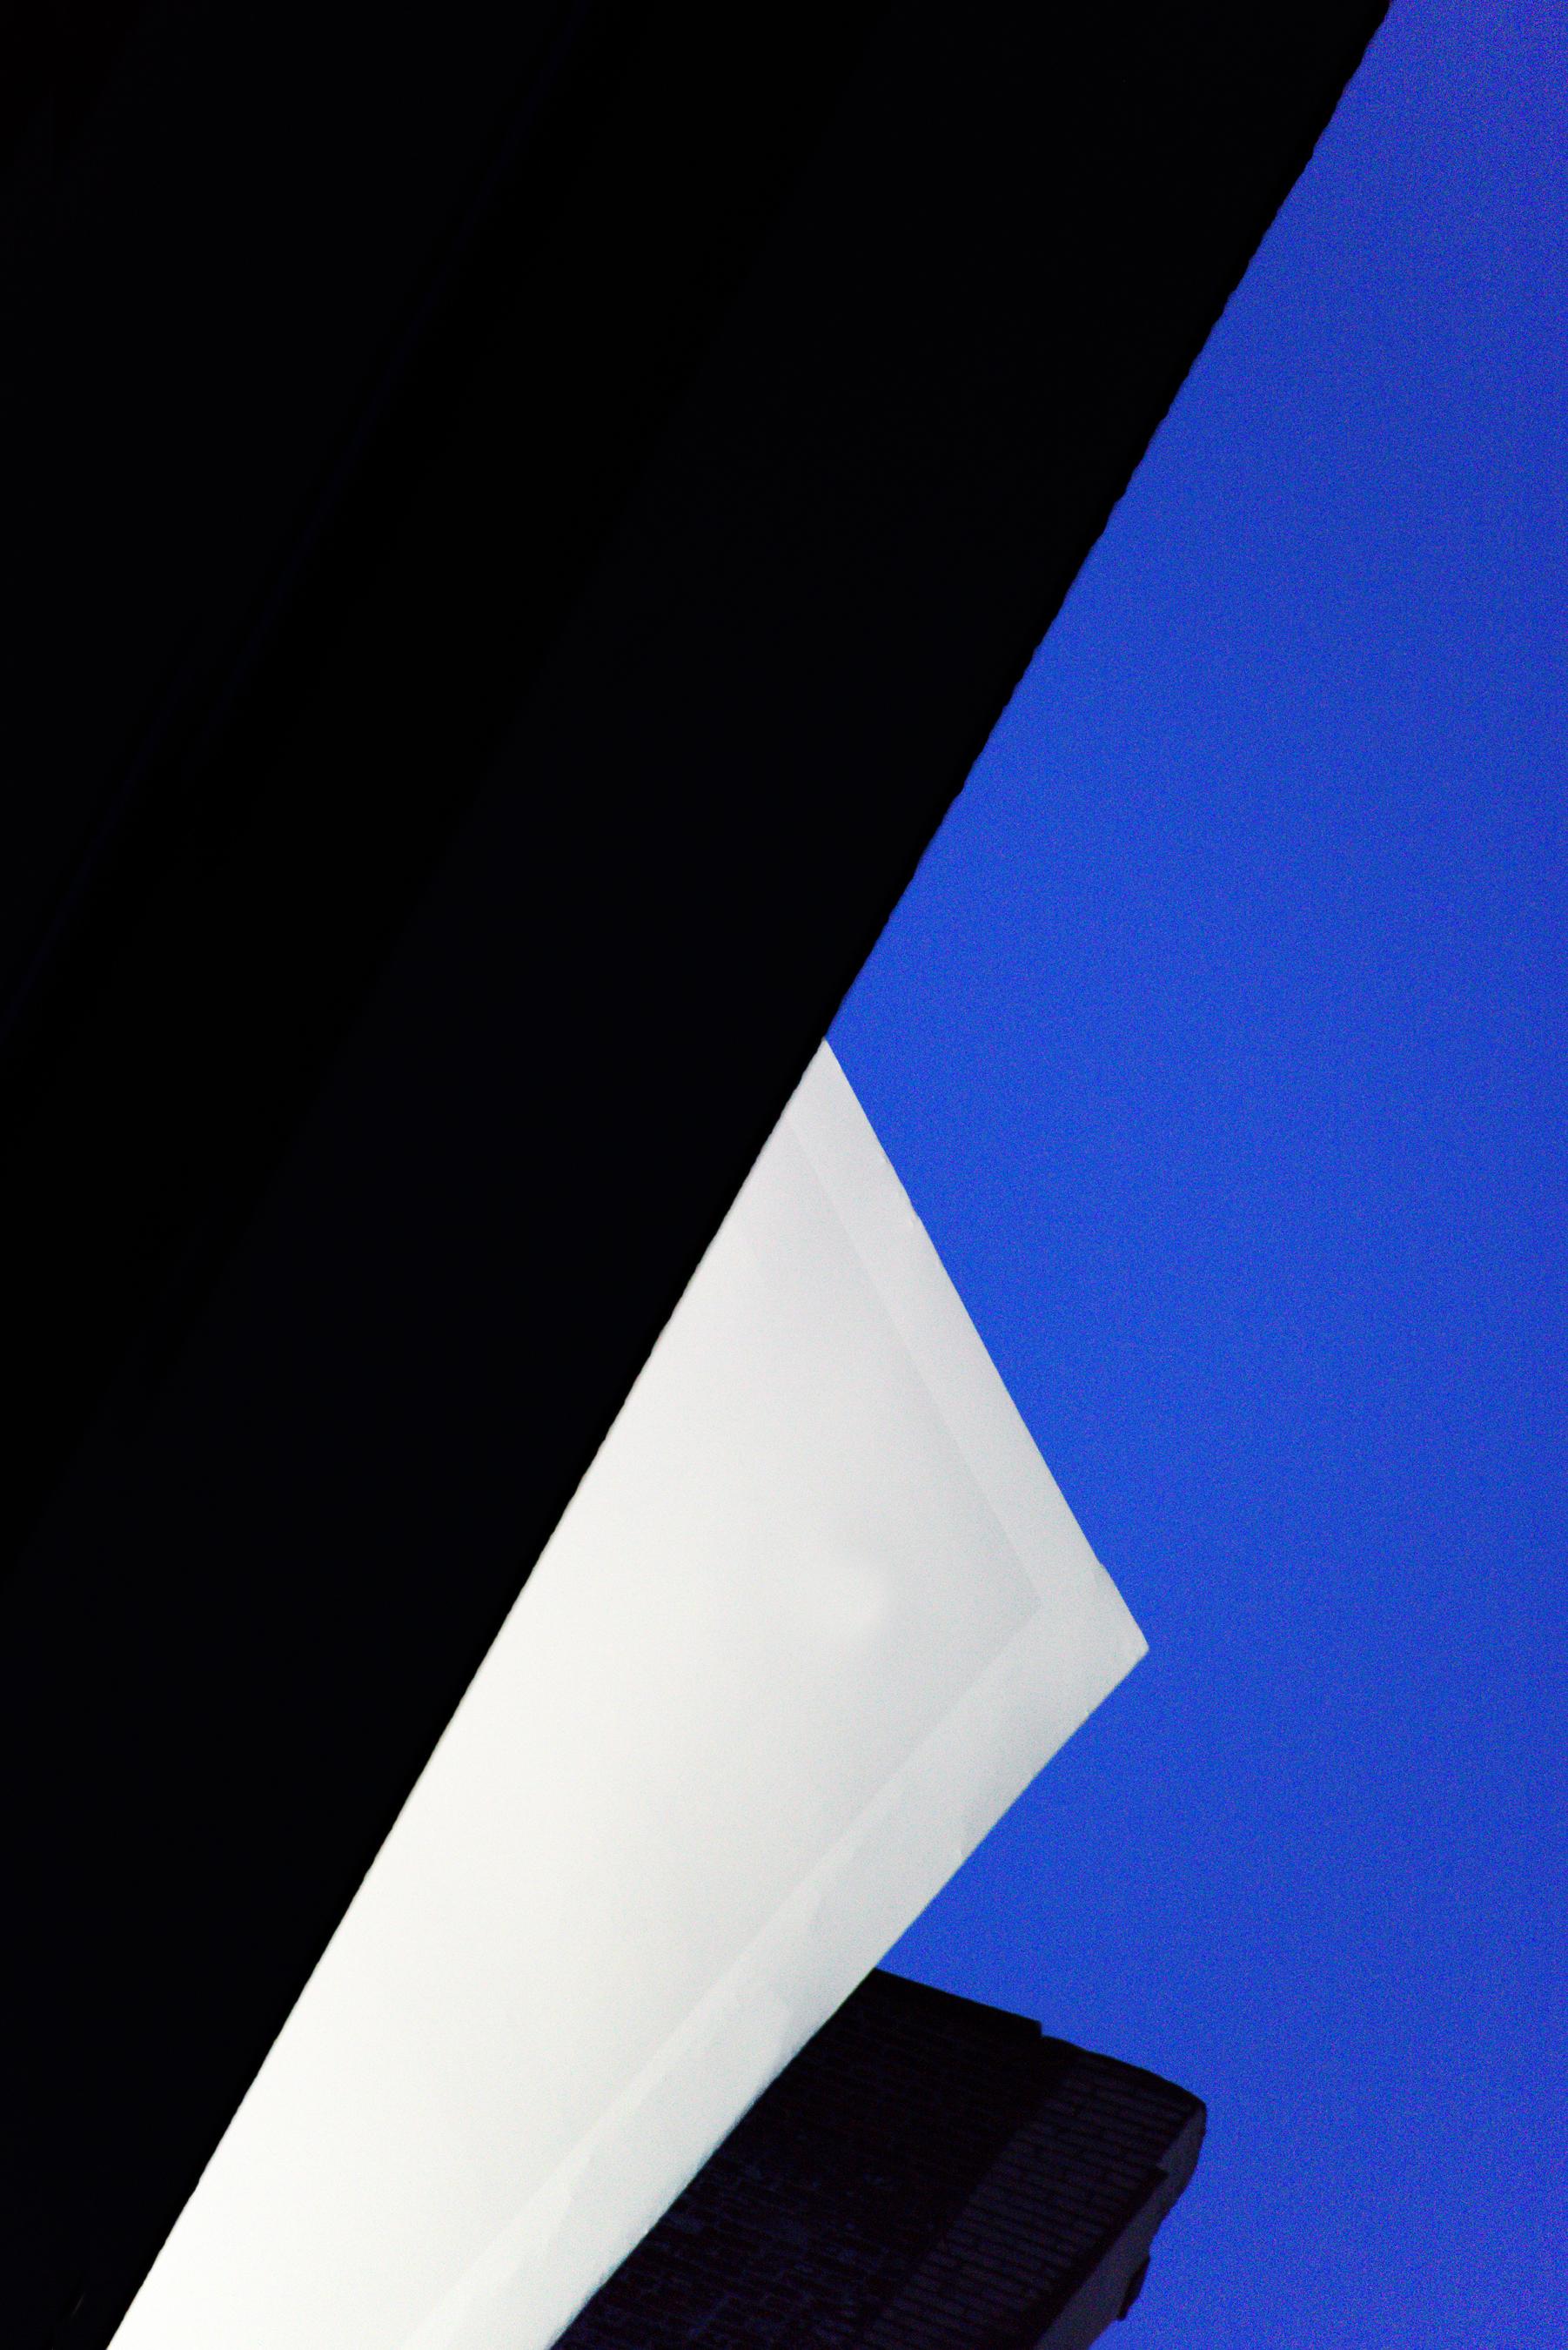 Bob Krasner Landscape Photograph - "One Billboard, Two Buildings", photograph, city, architecture, geometry, blue